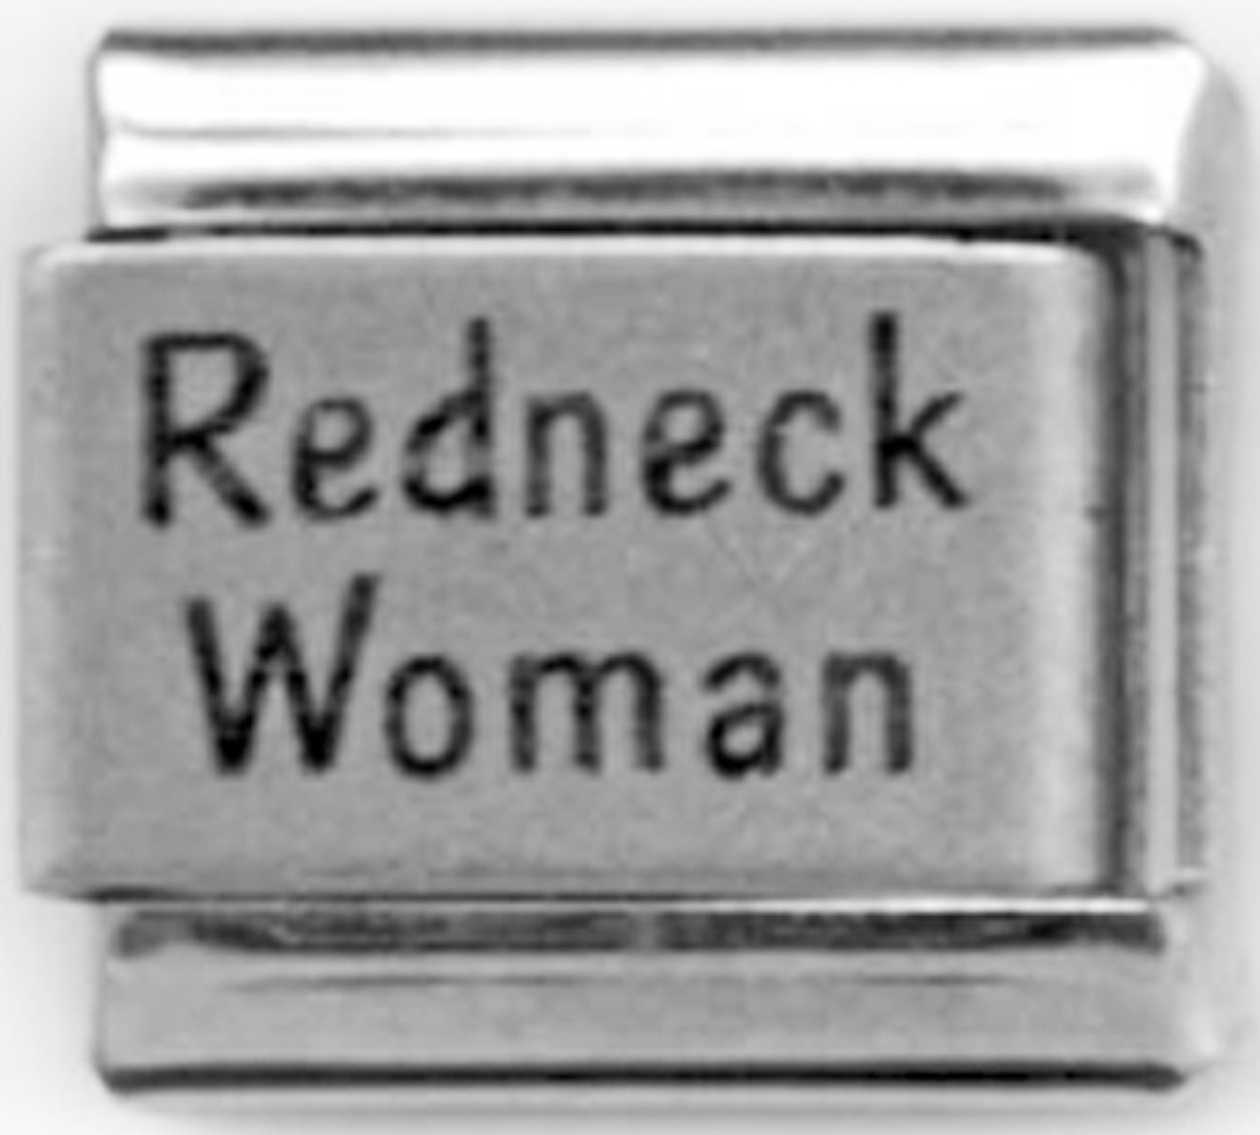 LC233-Redneck